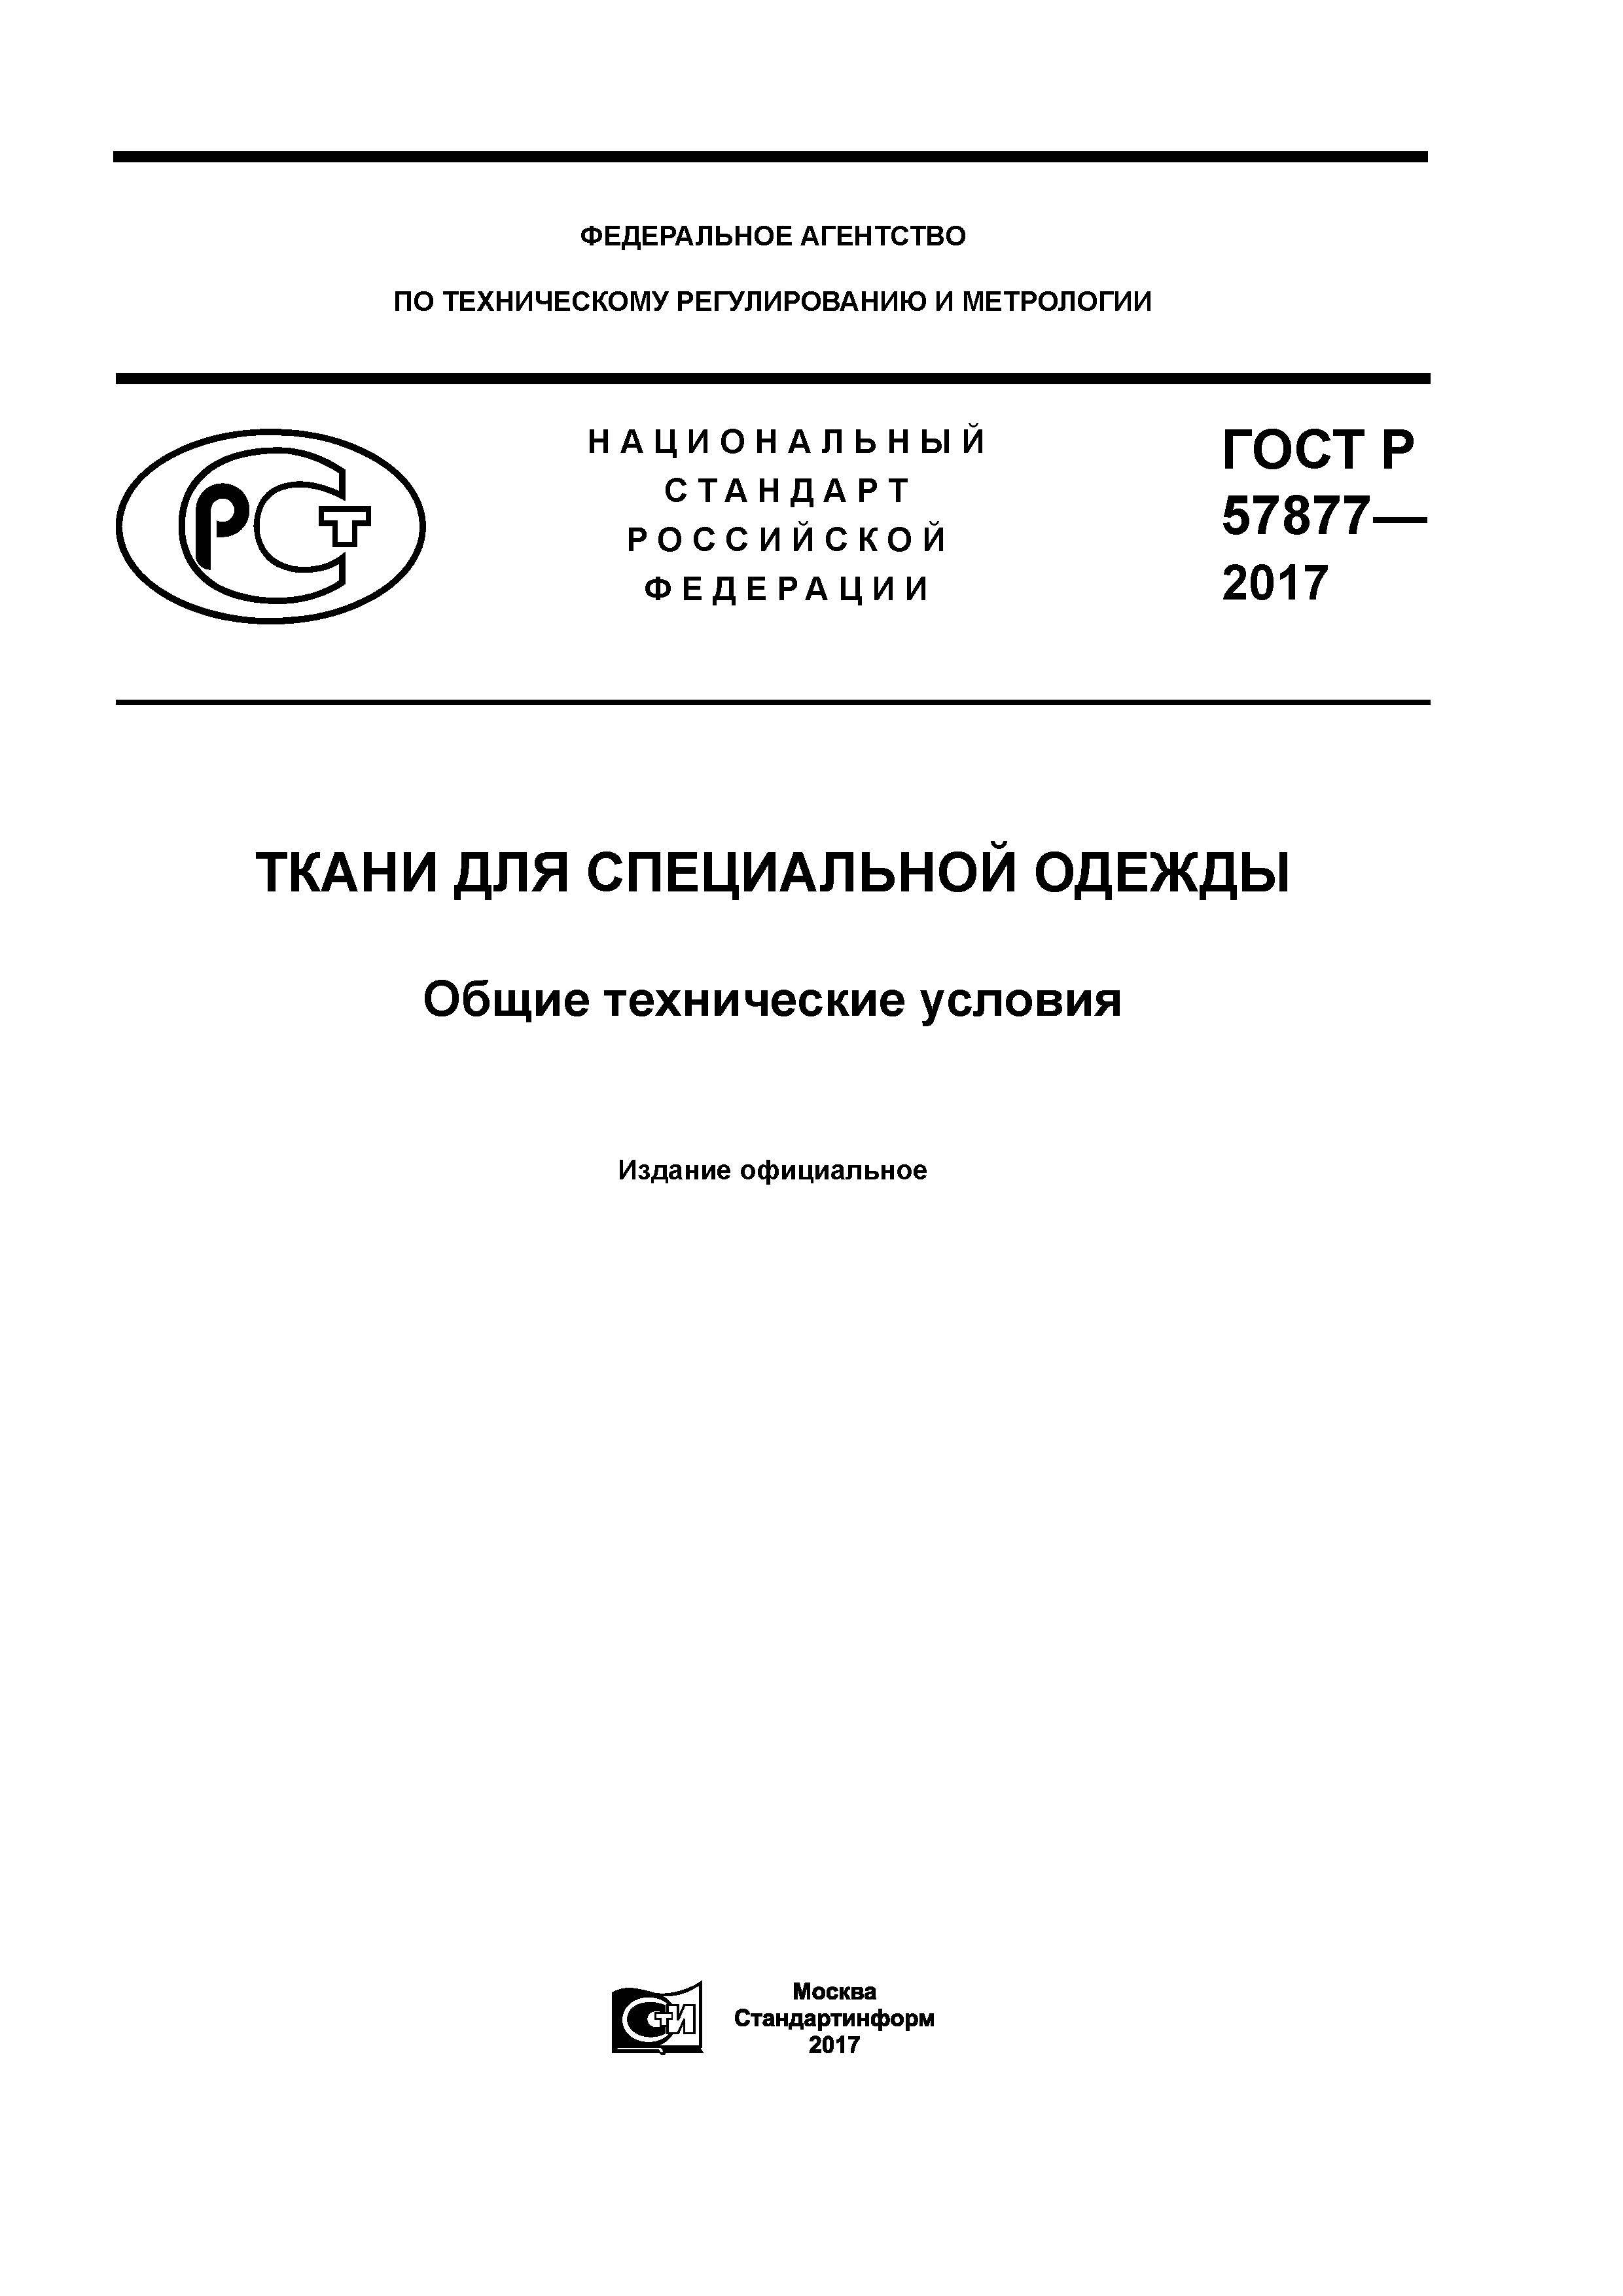 ГОСТ Р 57877-2017